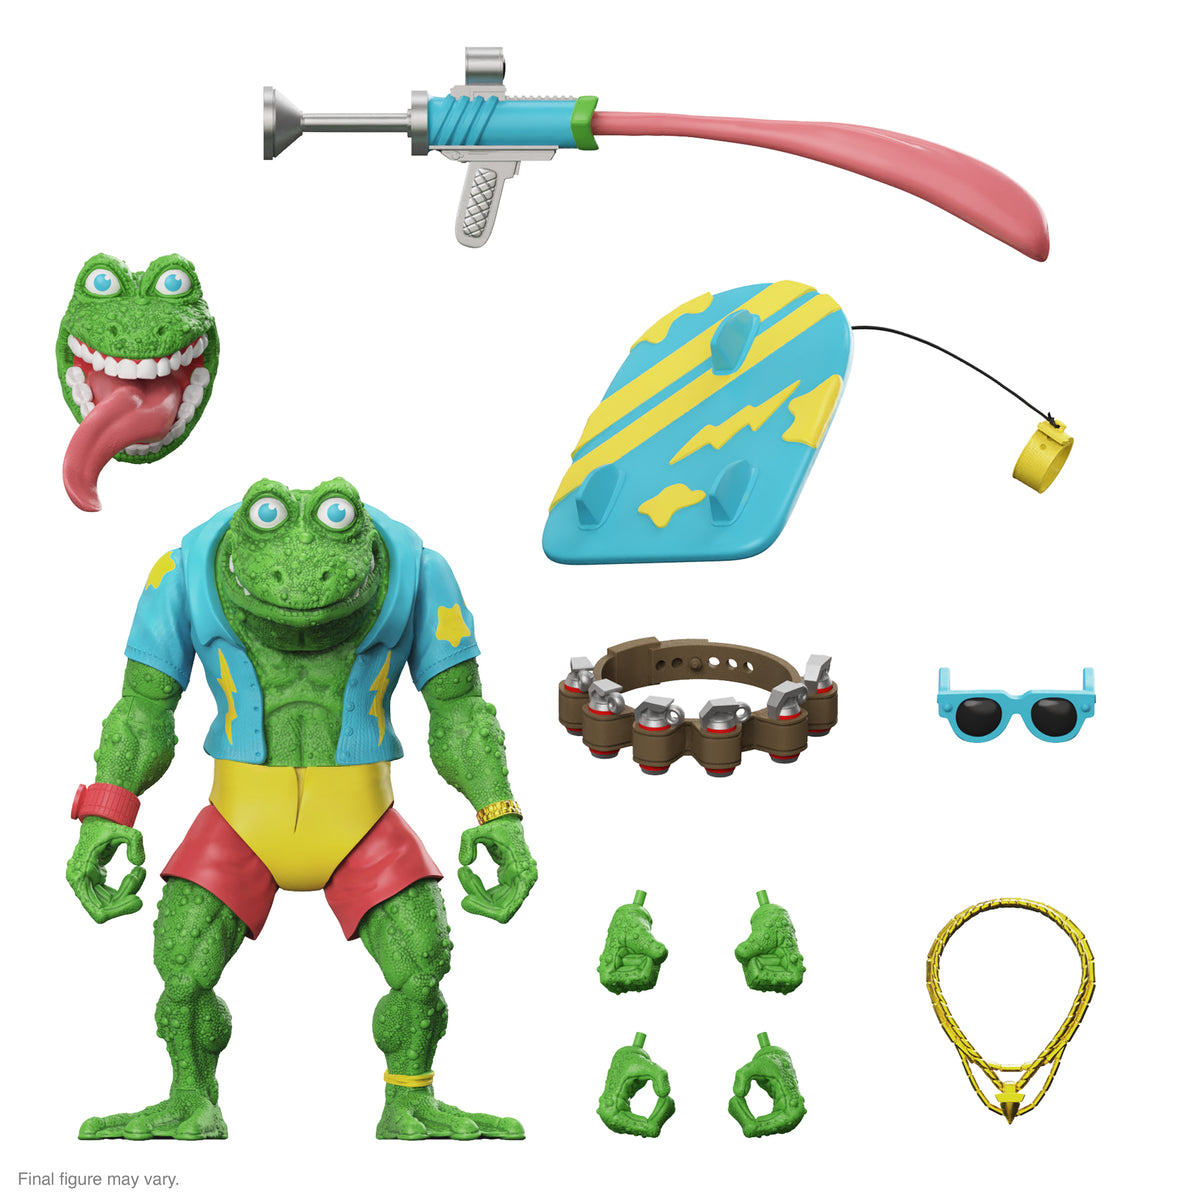 Teenage Mutant Ninja Turtles Ultimate Glow in The Dark Muckman & Joe Eyeball (Cartoon) 7 inch Scale Action Figure, Green